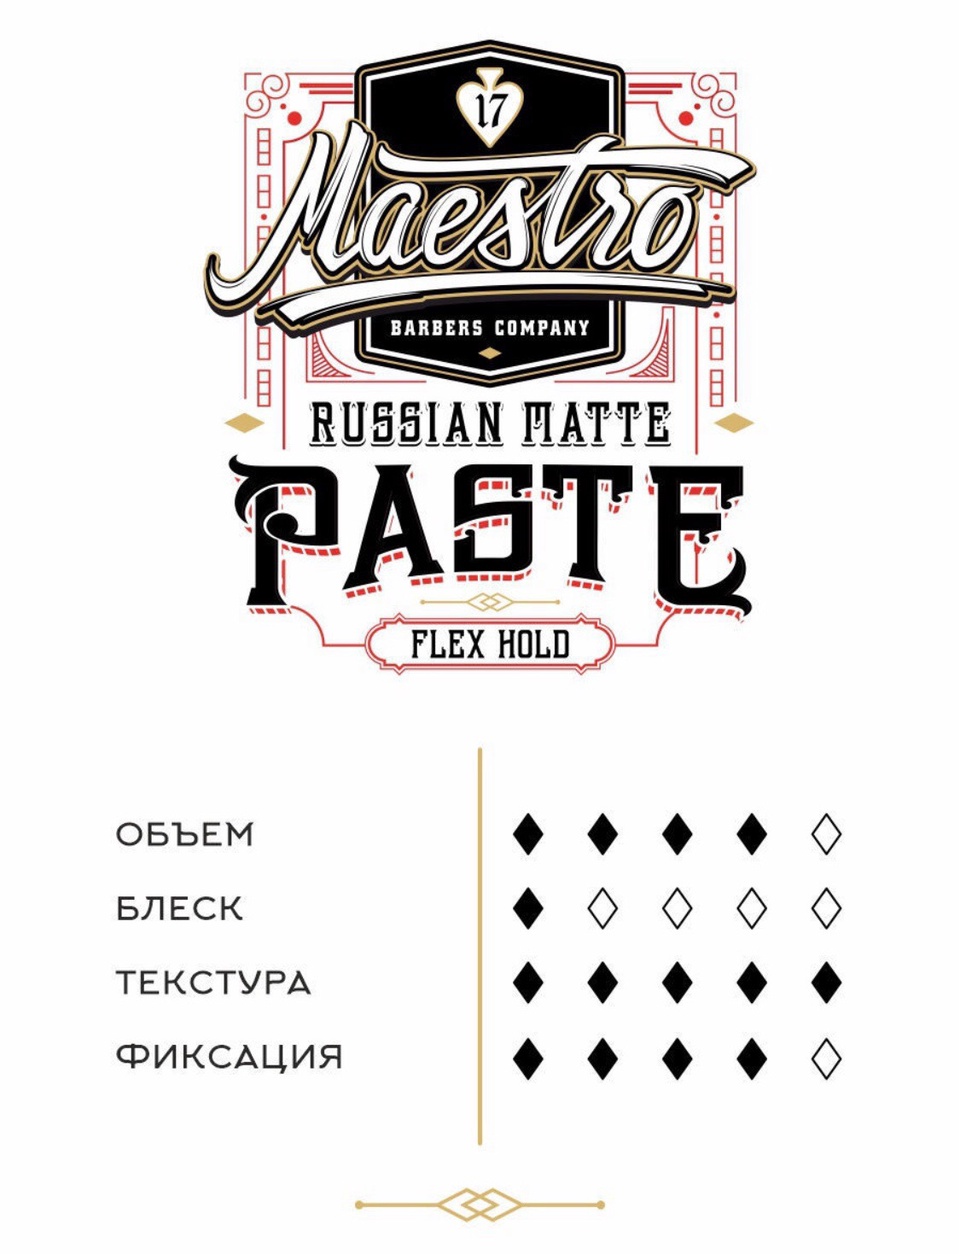 Maestro - Russian Matte Paste, 75г - 800 ₽, заказать онлайн.